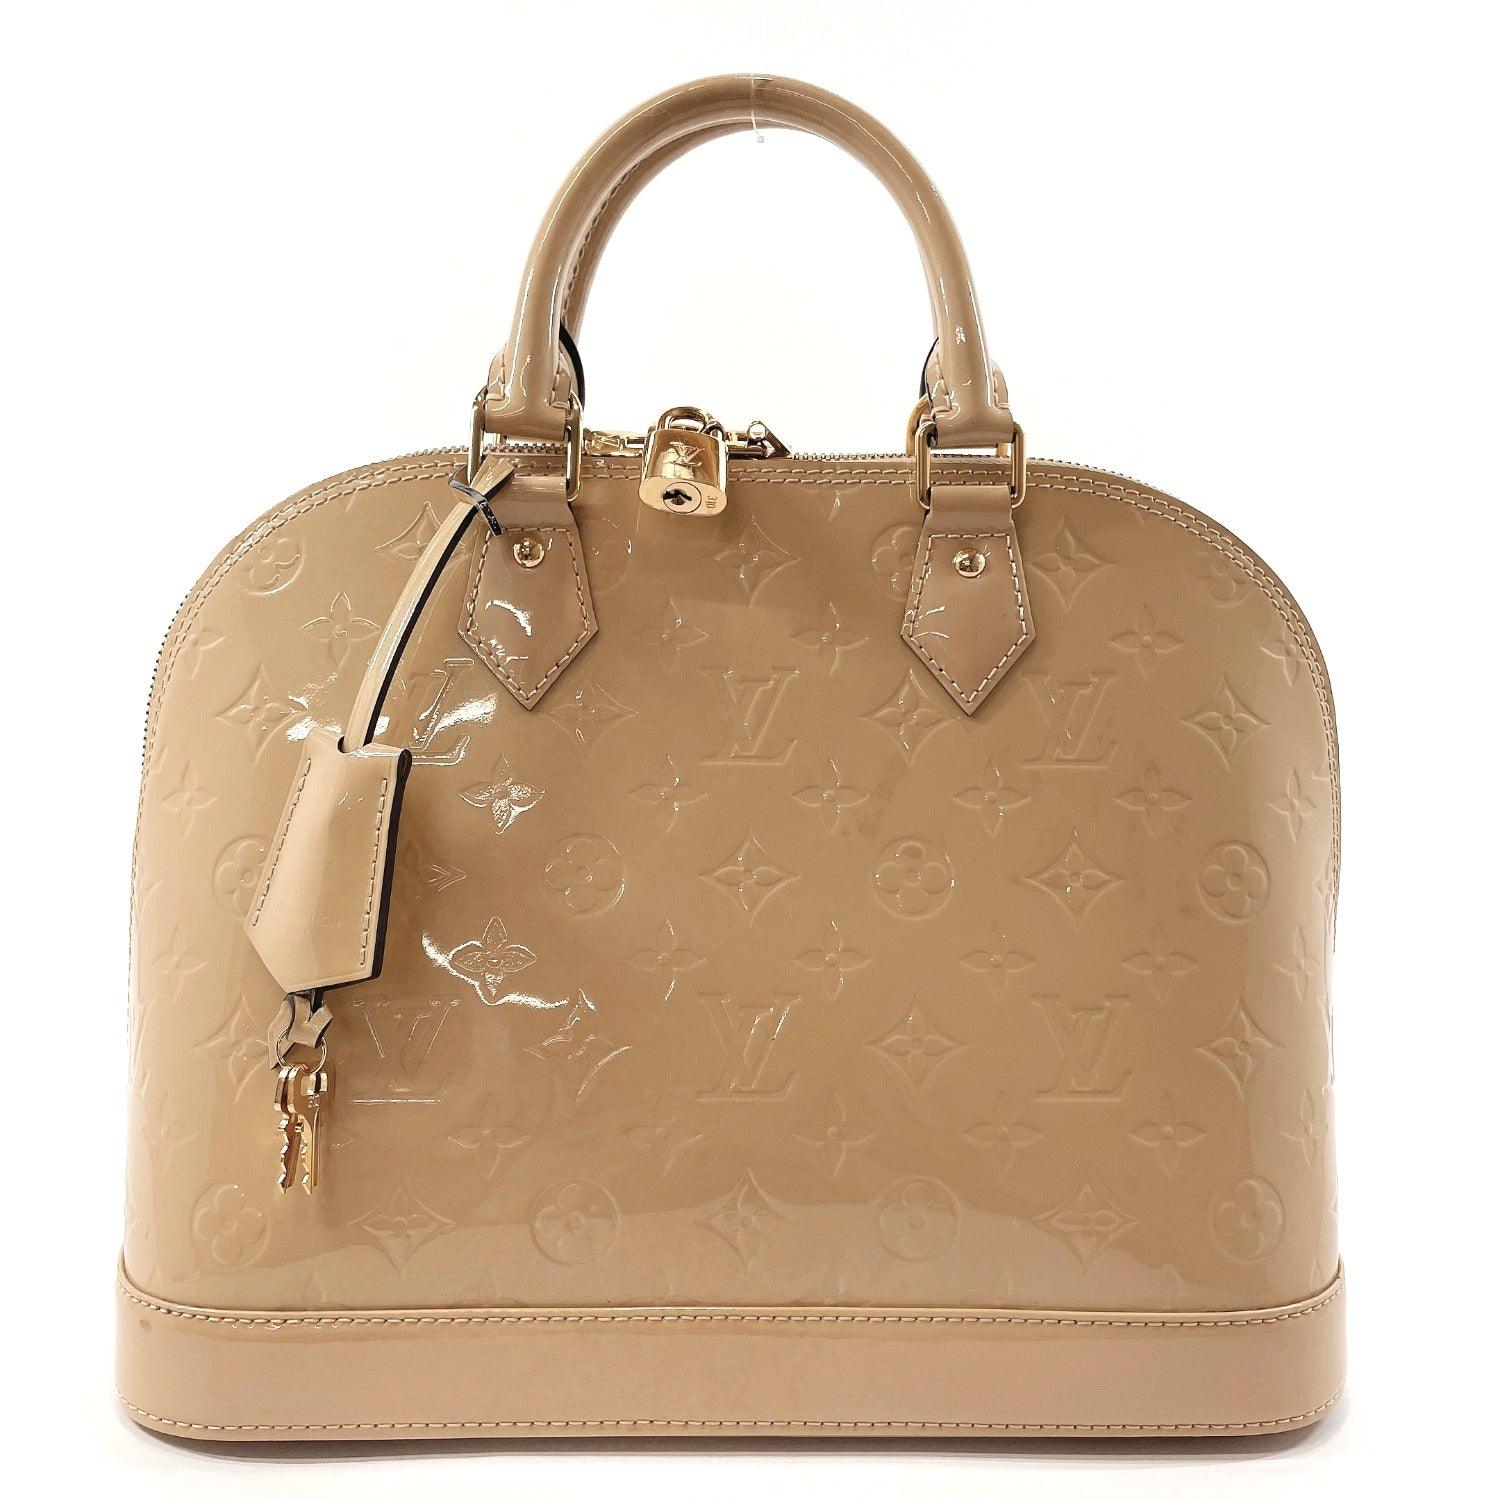 LOUIS VUITTON Handbag M90170 Alma PM Monogram Vernis beige Women